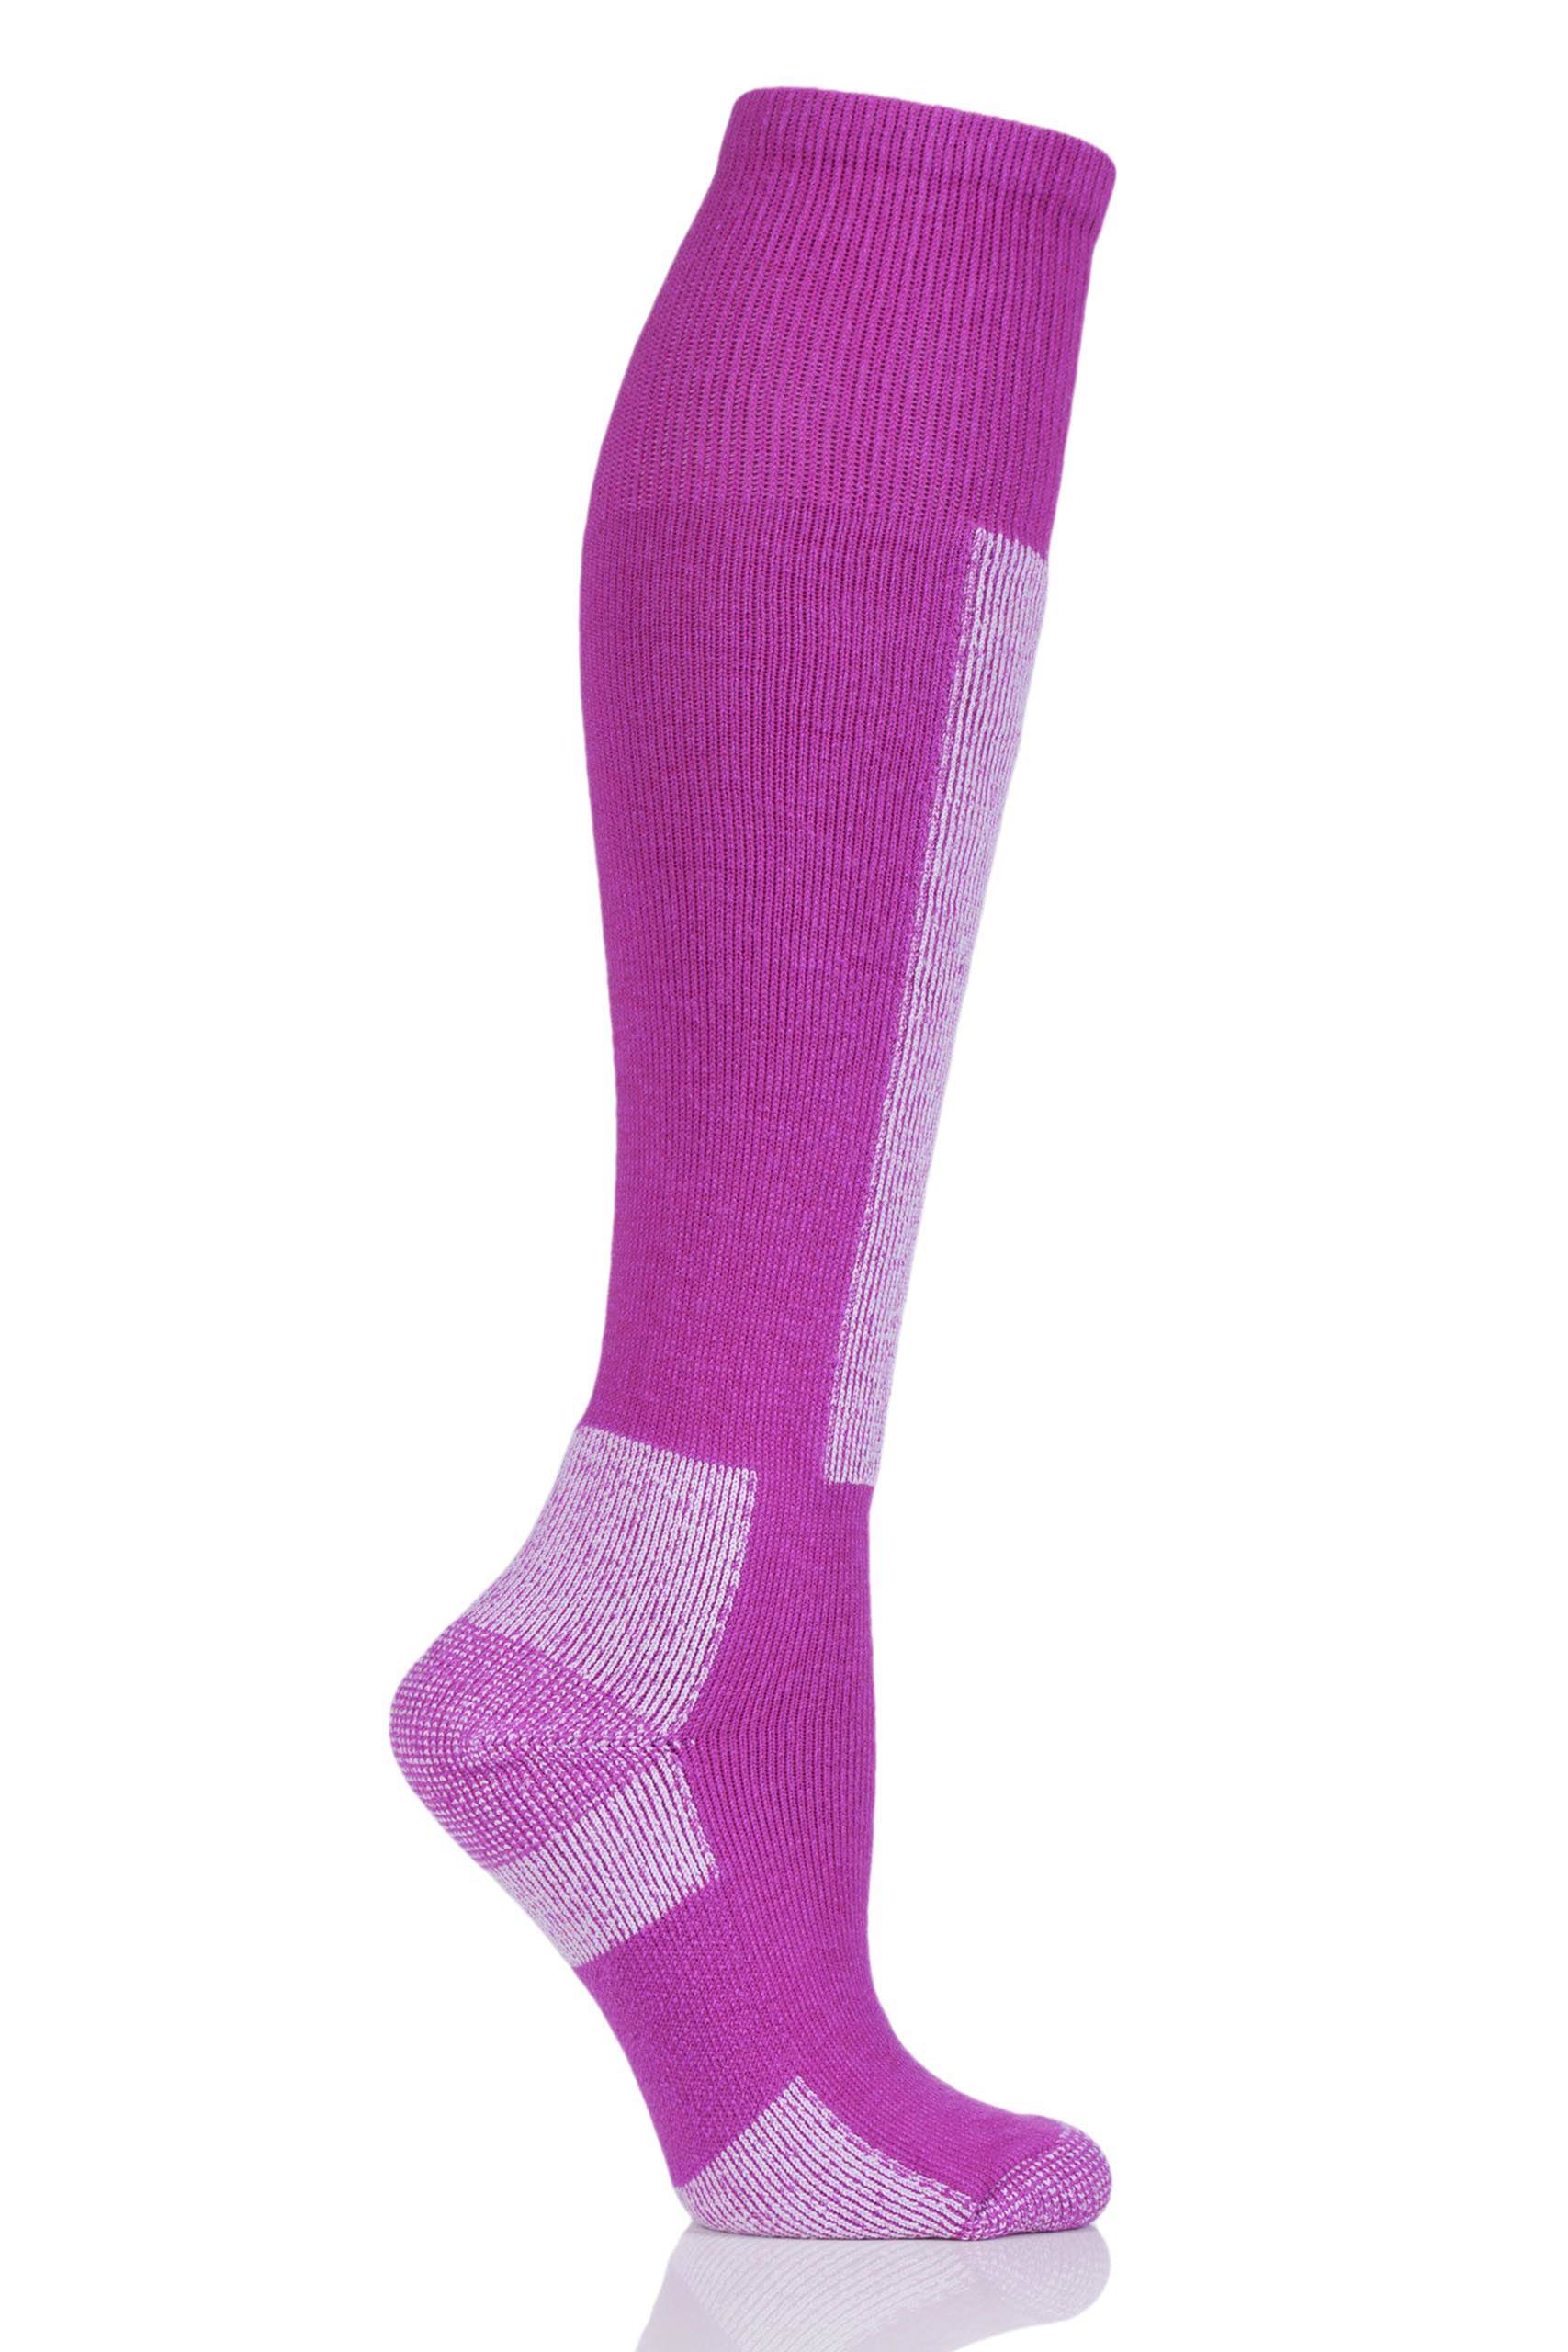 Thorlo Lightweight Ski Socks